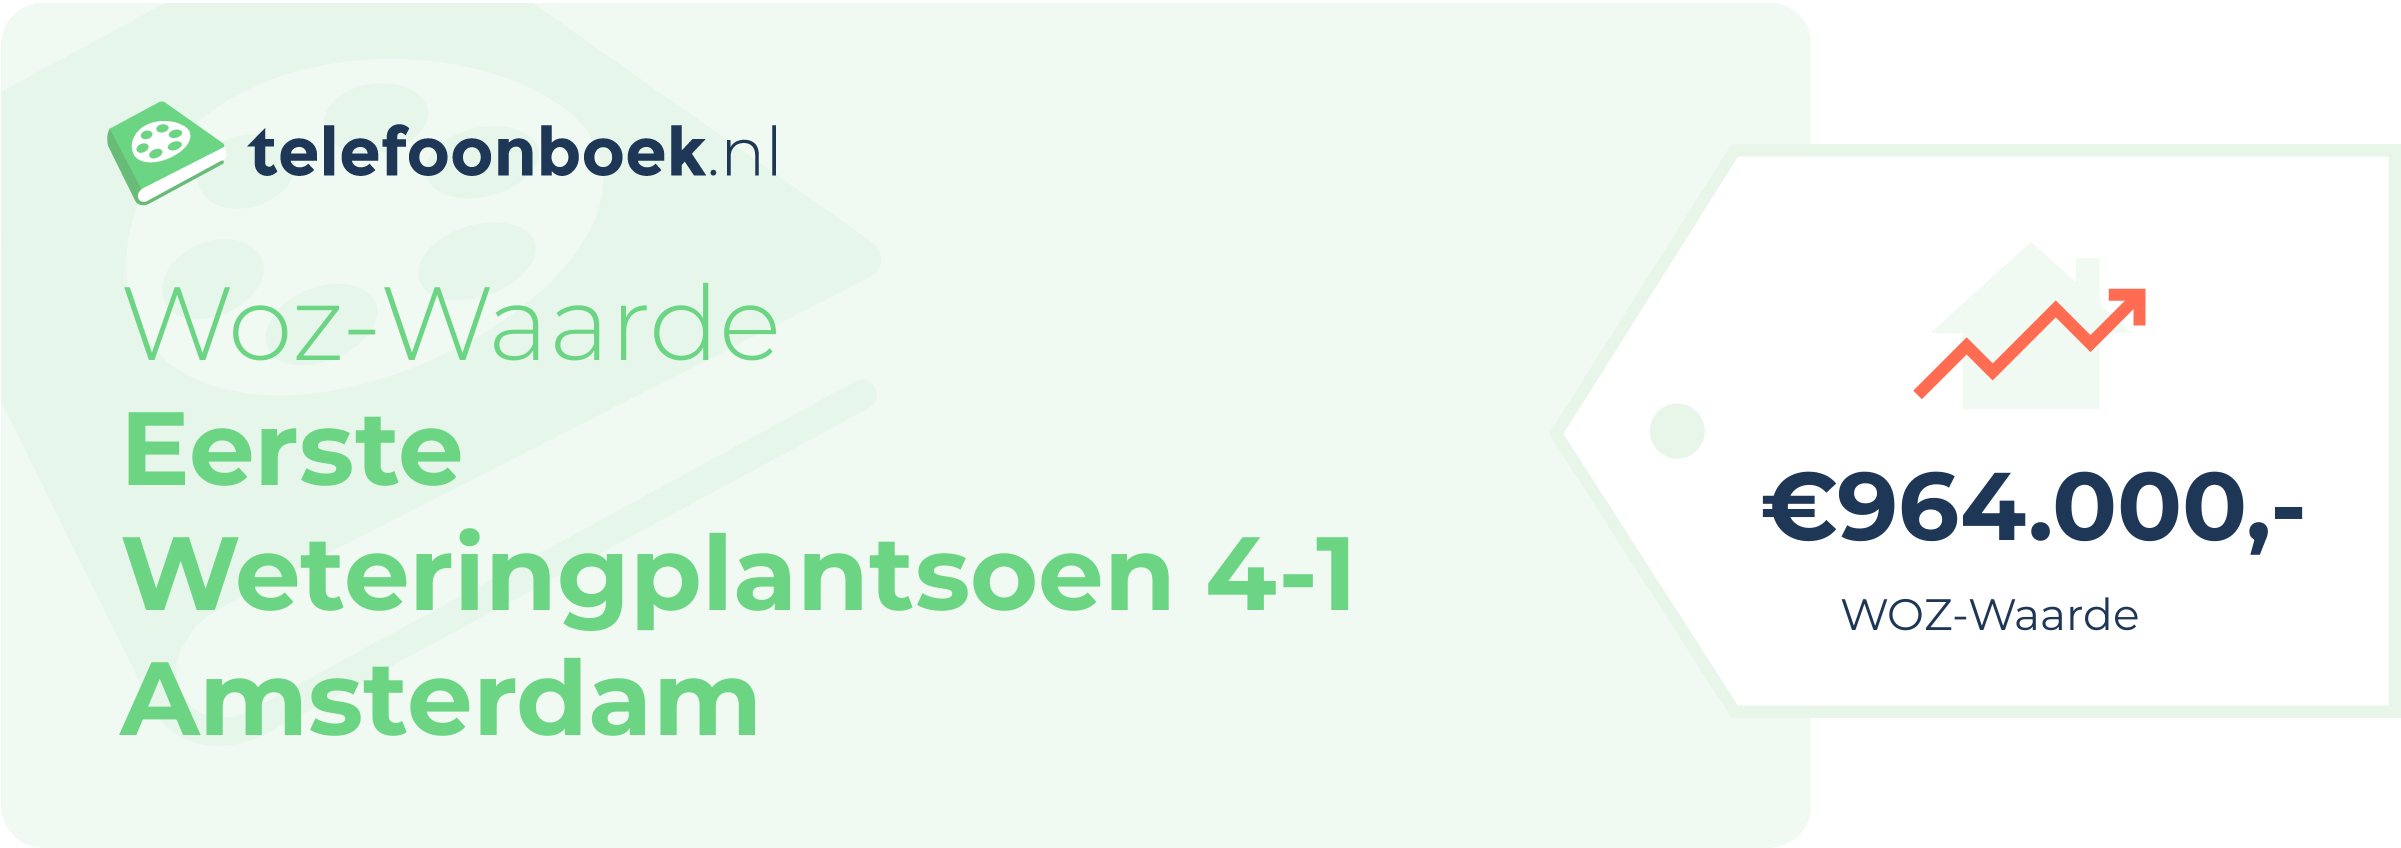 WOZ-waarde Eerste Weteringplantsoen 4-1 Amsterdam